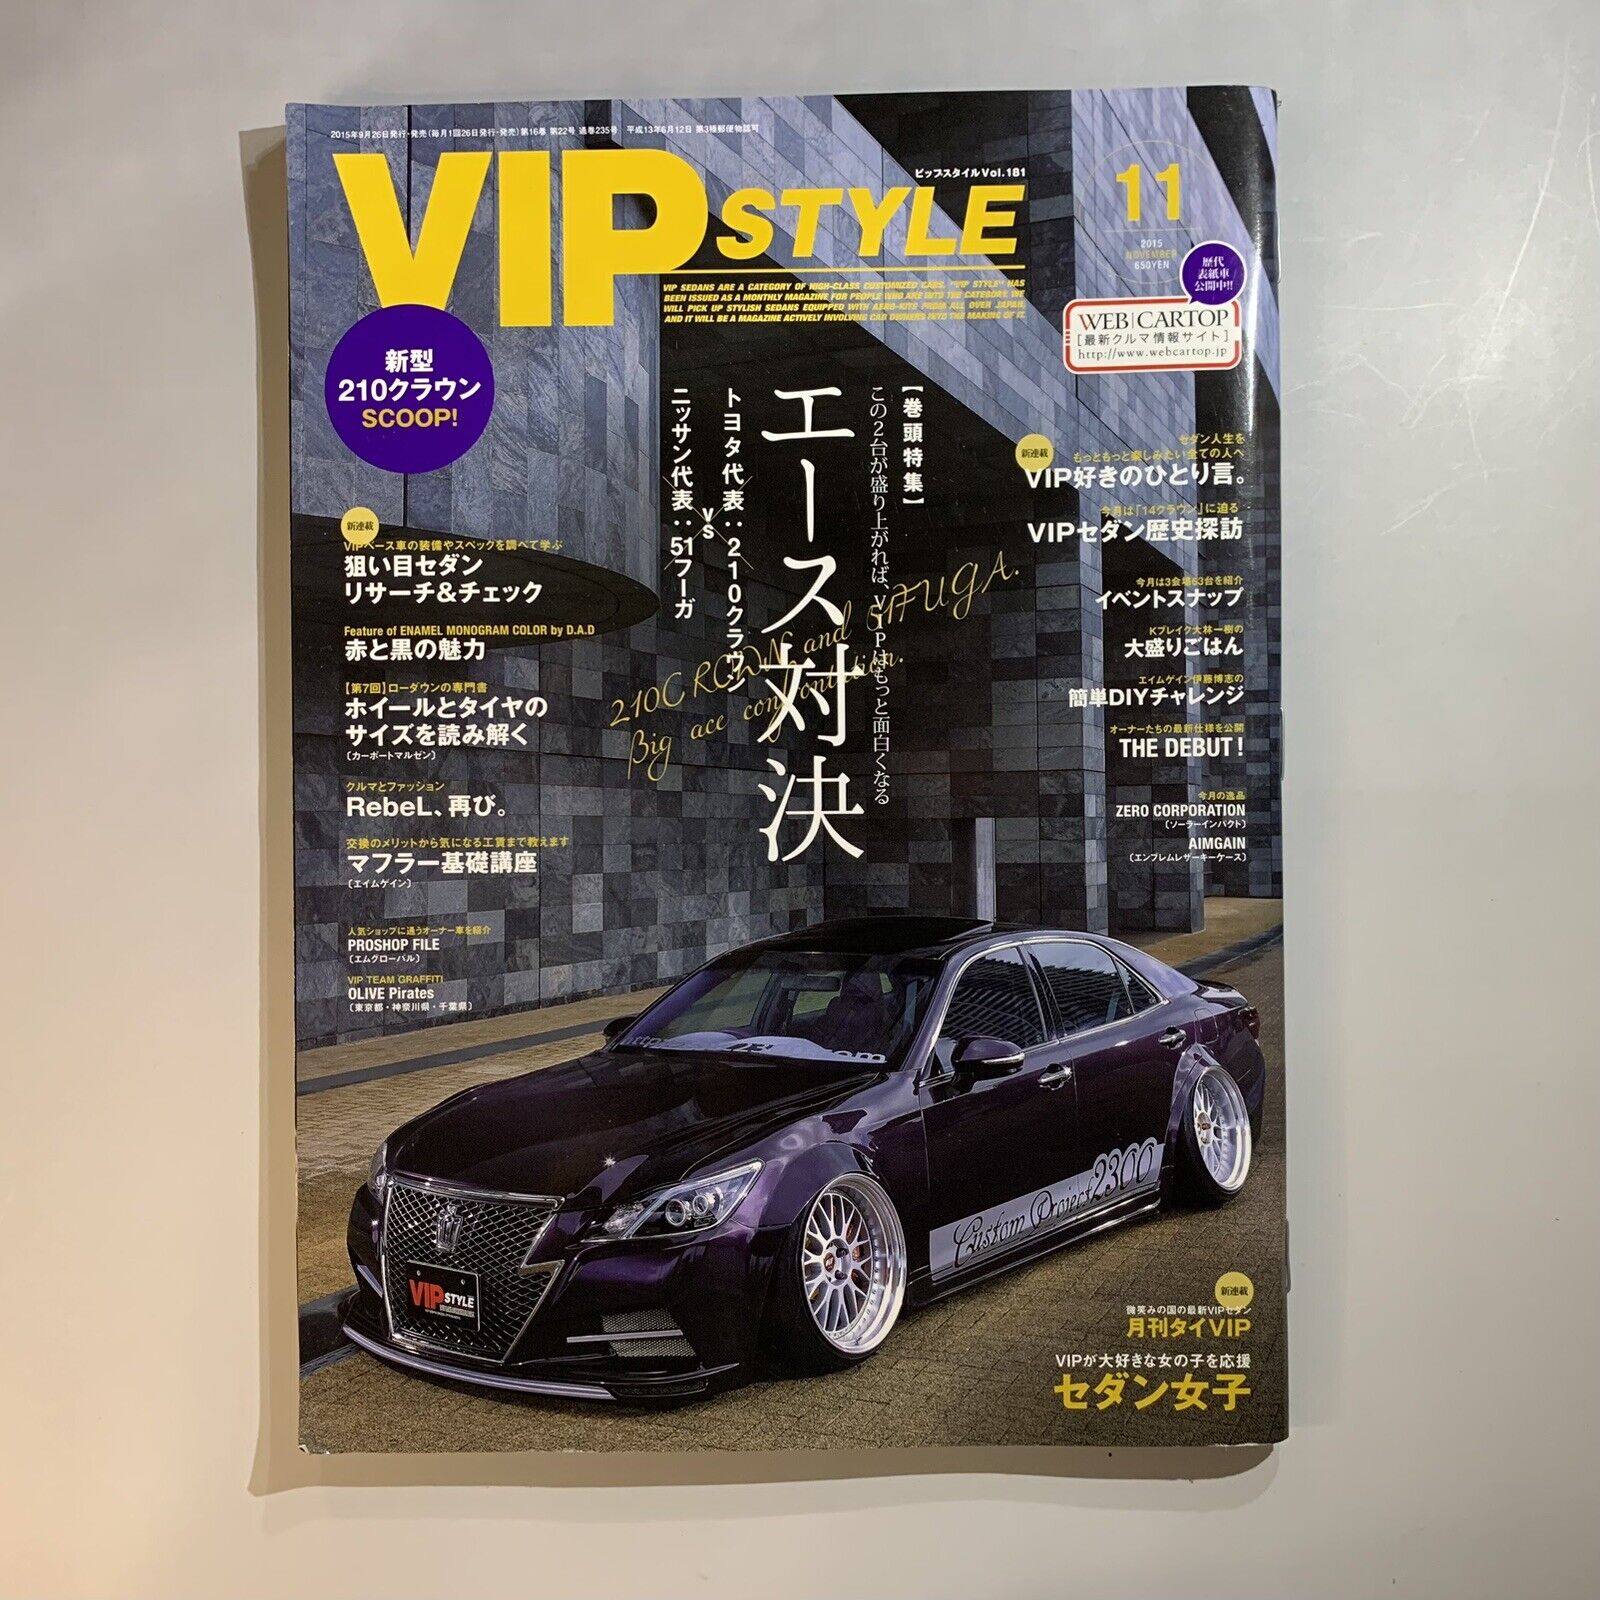 VIP Style Car Magazine Toyota 210Crown VS Nissan Fuga InfinitiM Vol.181 Nov 2015